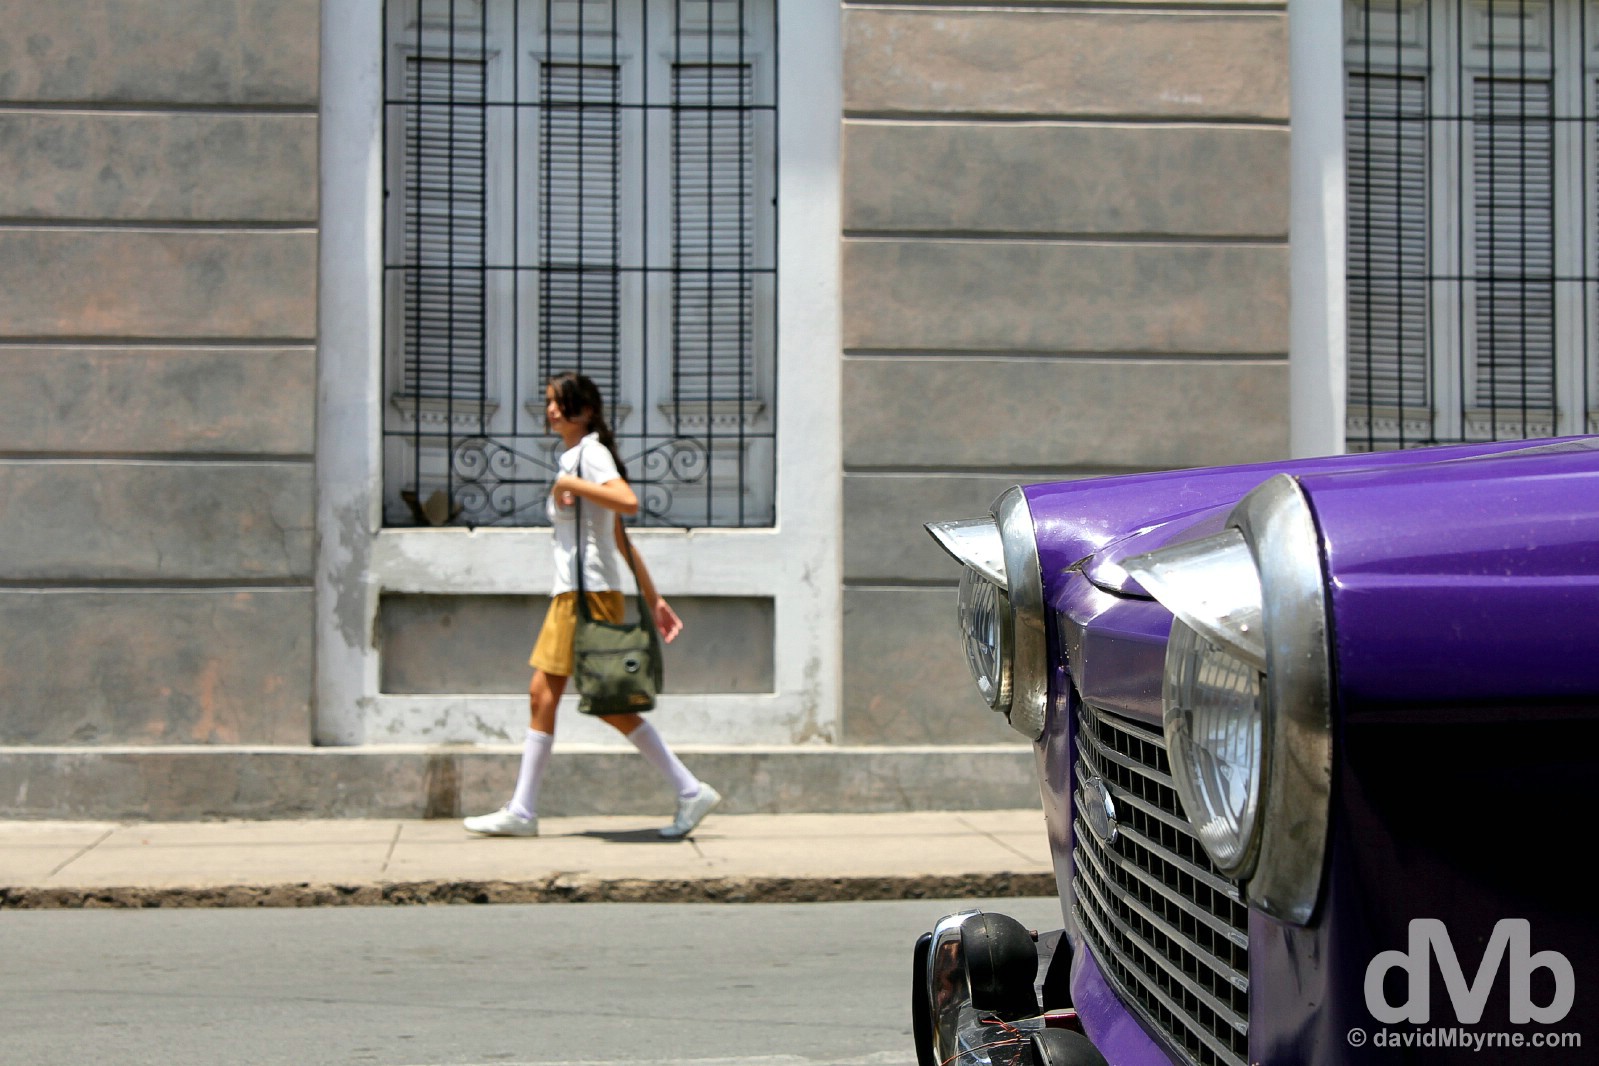 On the streets of Cienfuegos Cuba. May 8, 2015.